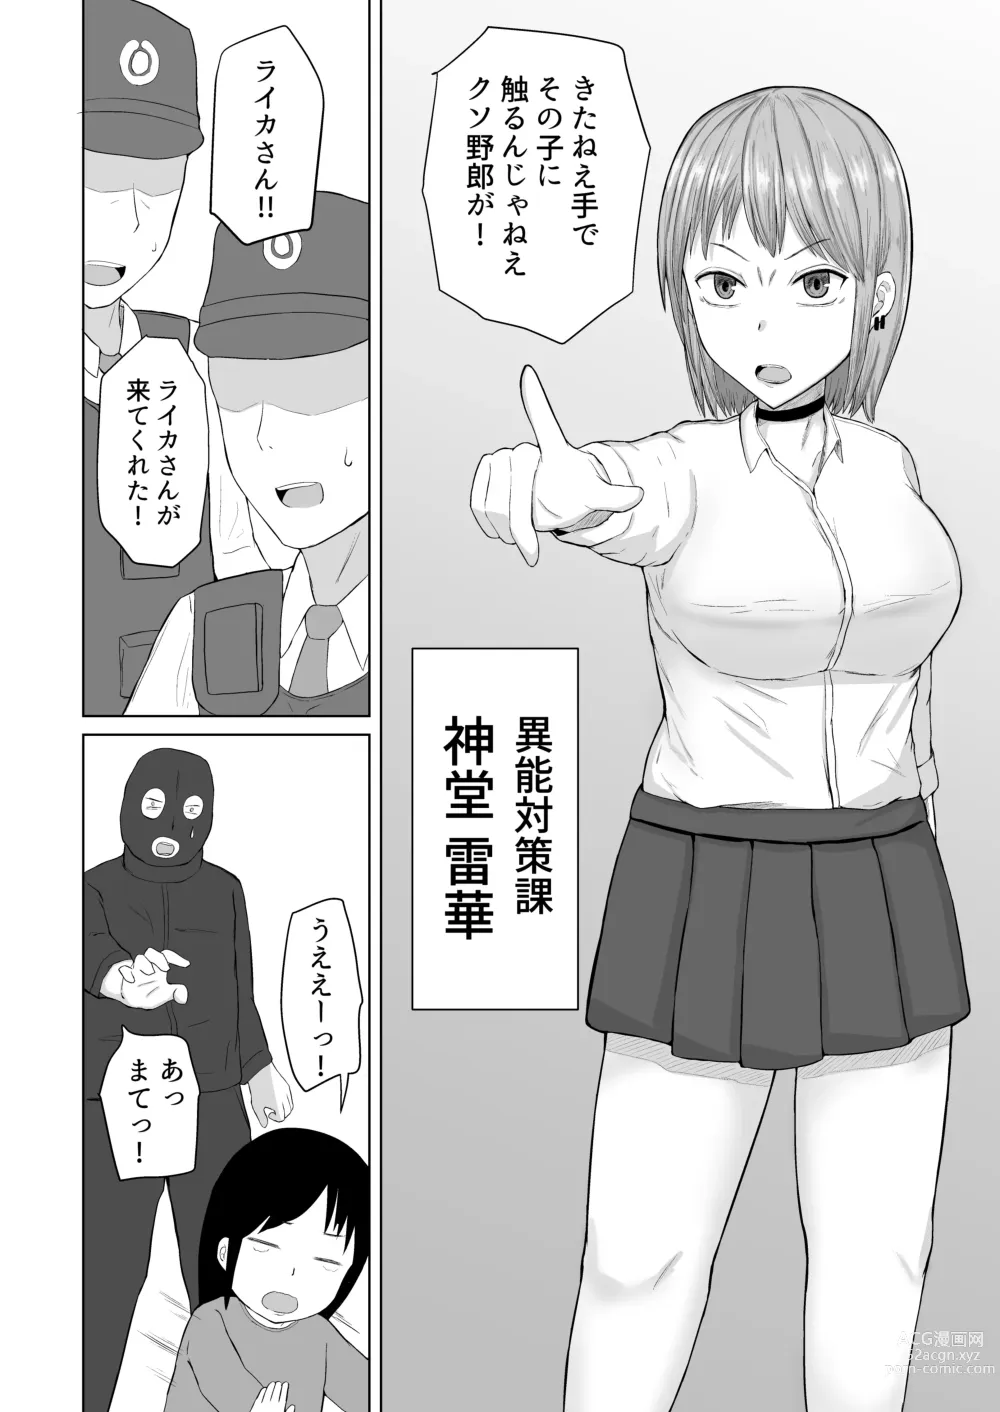 Page 4 of doujinshi Chounouryoku Shoujo  Laika-chan VS Yarichin  Kusoyaro